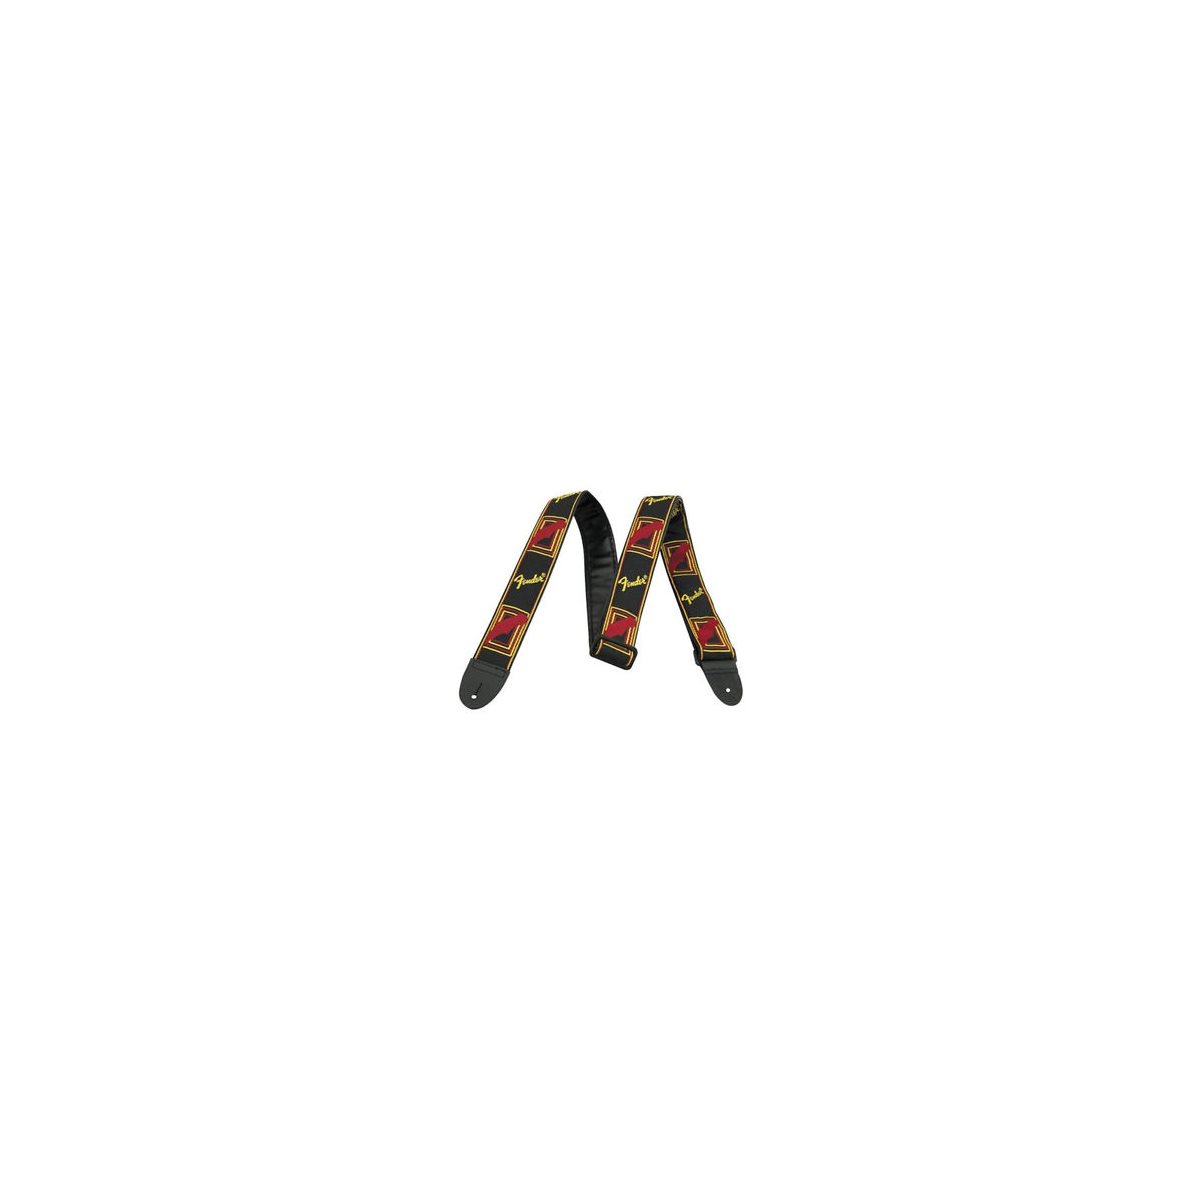 FENDER - Monogrammed Strap - NOIR / JAUNE / ROUGE